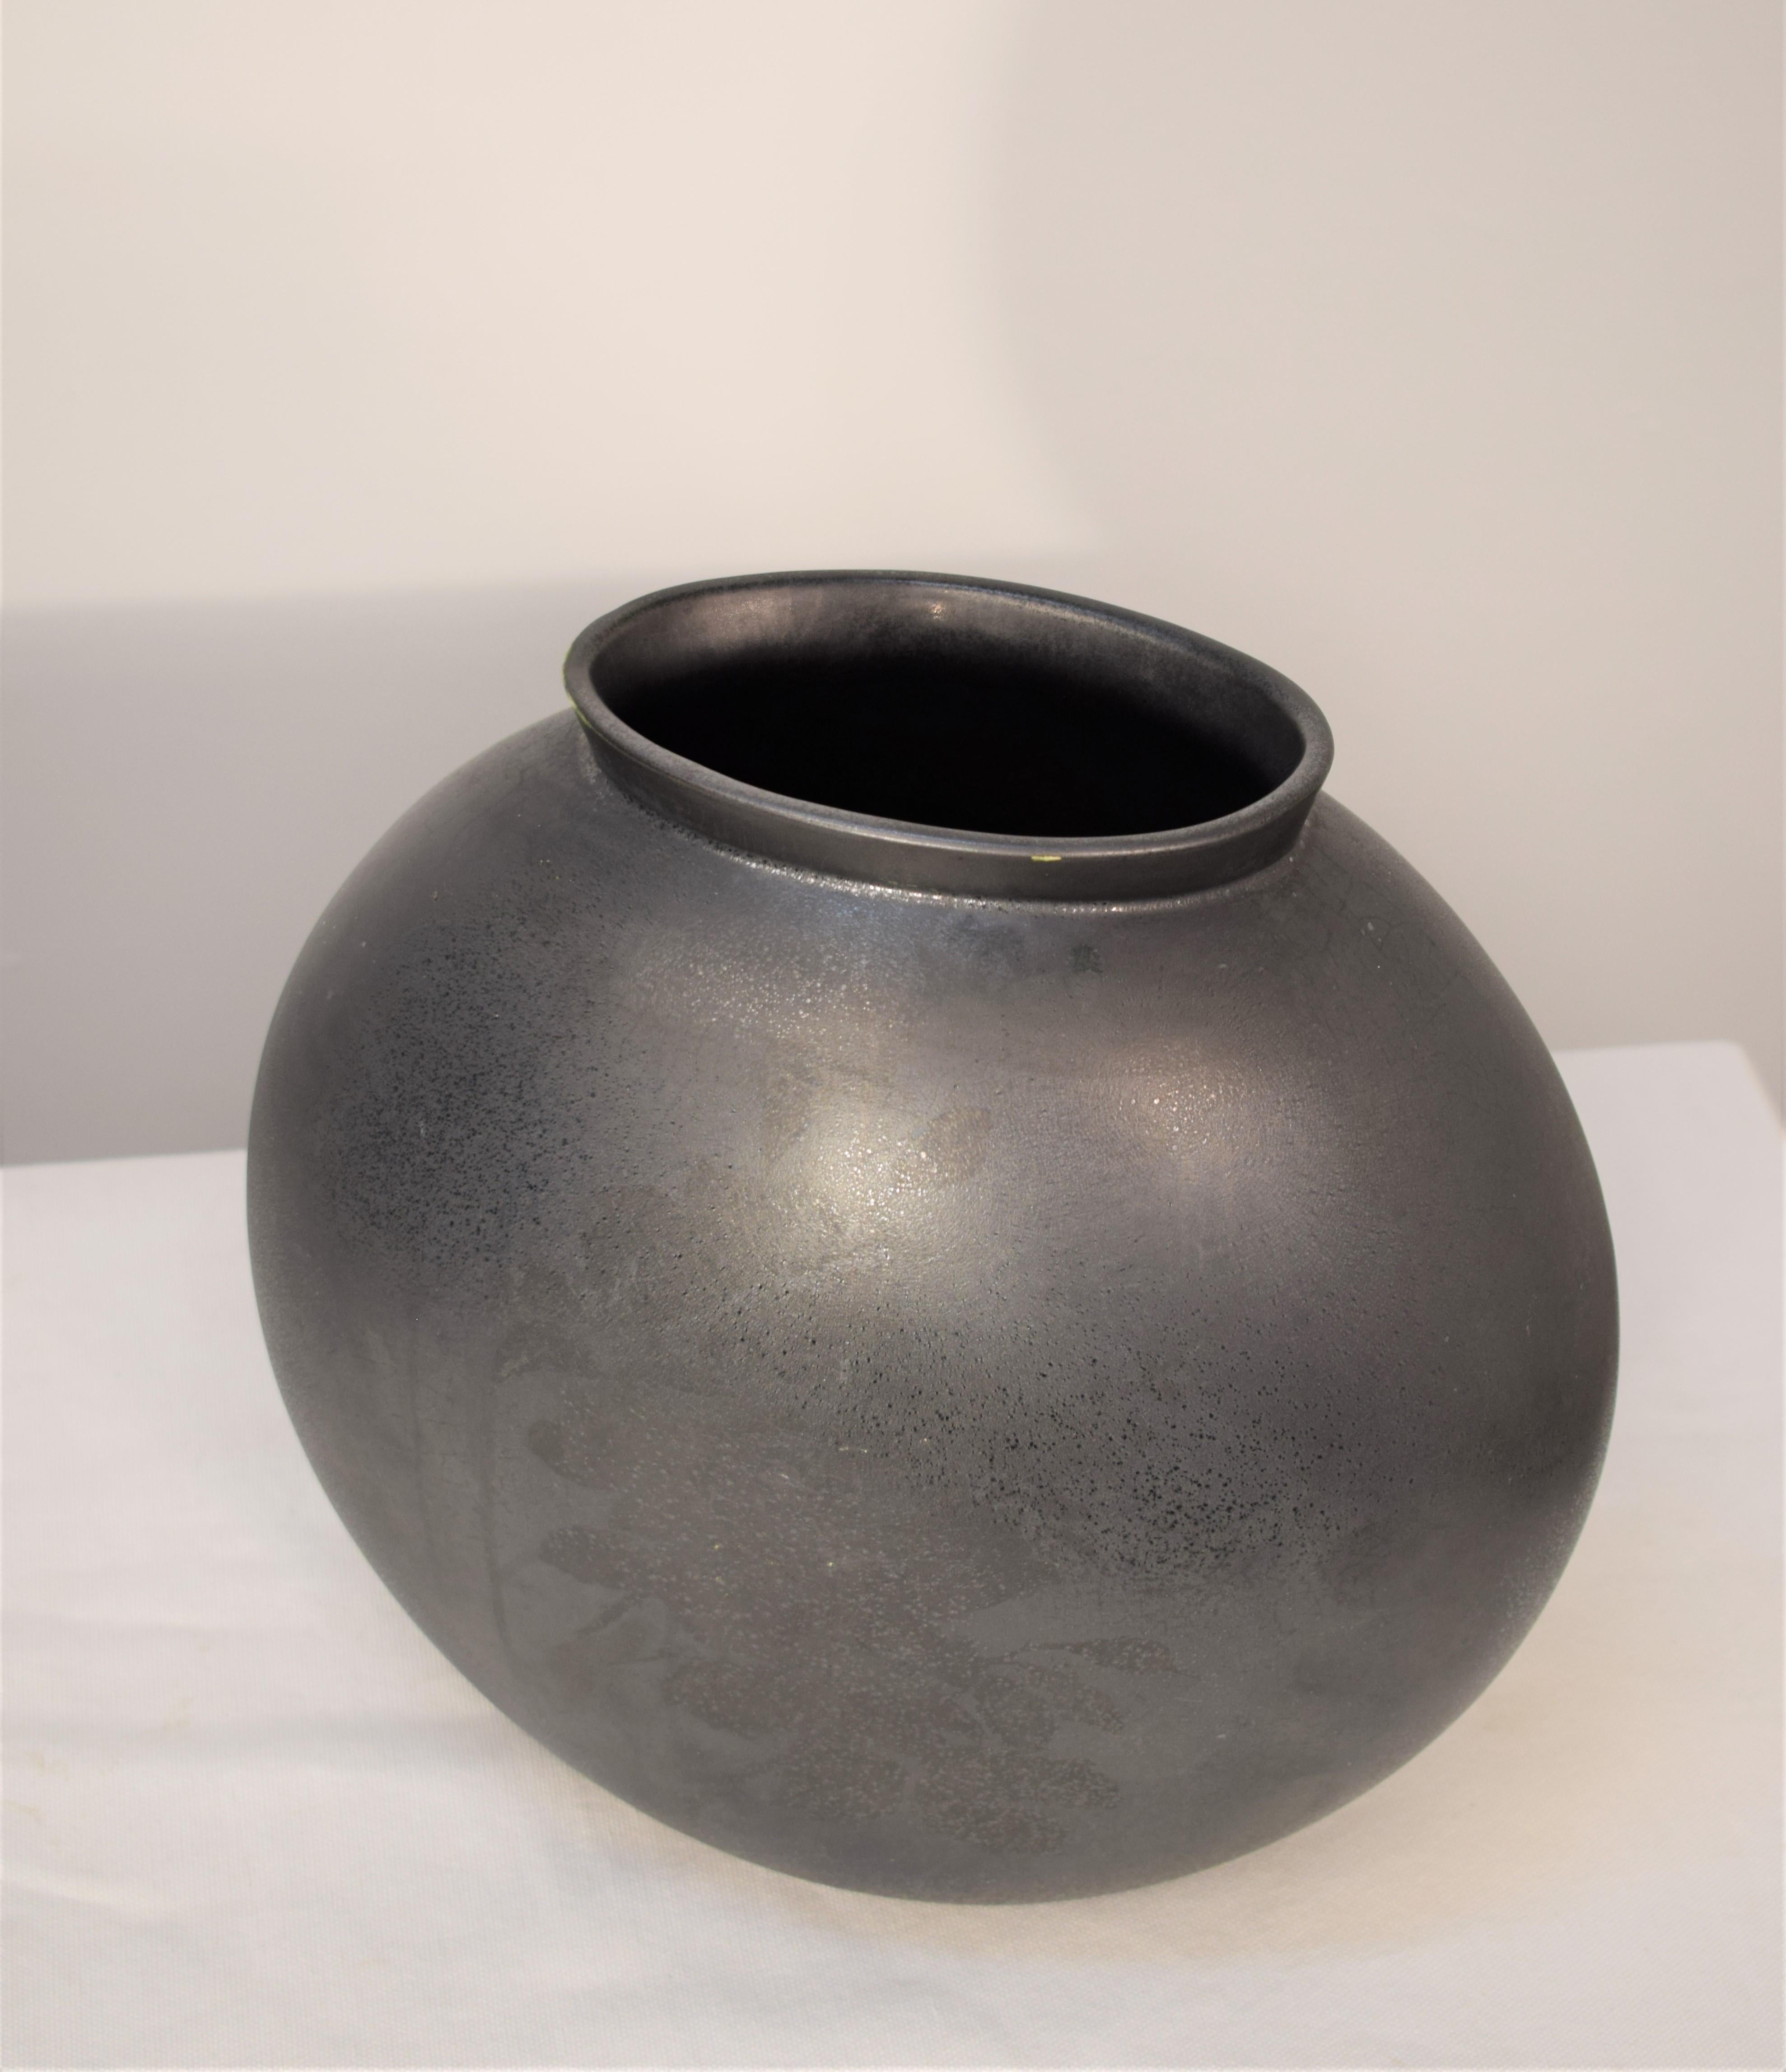 Lavenia vase by Guido Andlovitz, 1930s.
Ceramic.
Dimensions: H= 30 cm; W= 32 cm; D= 18 cm.